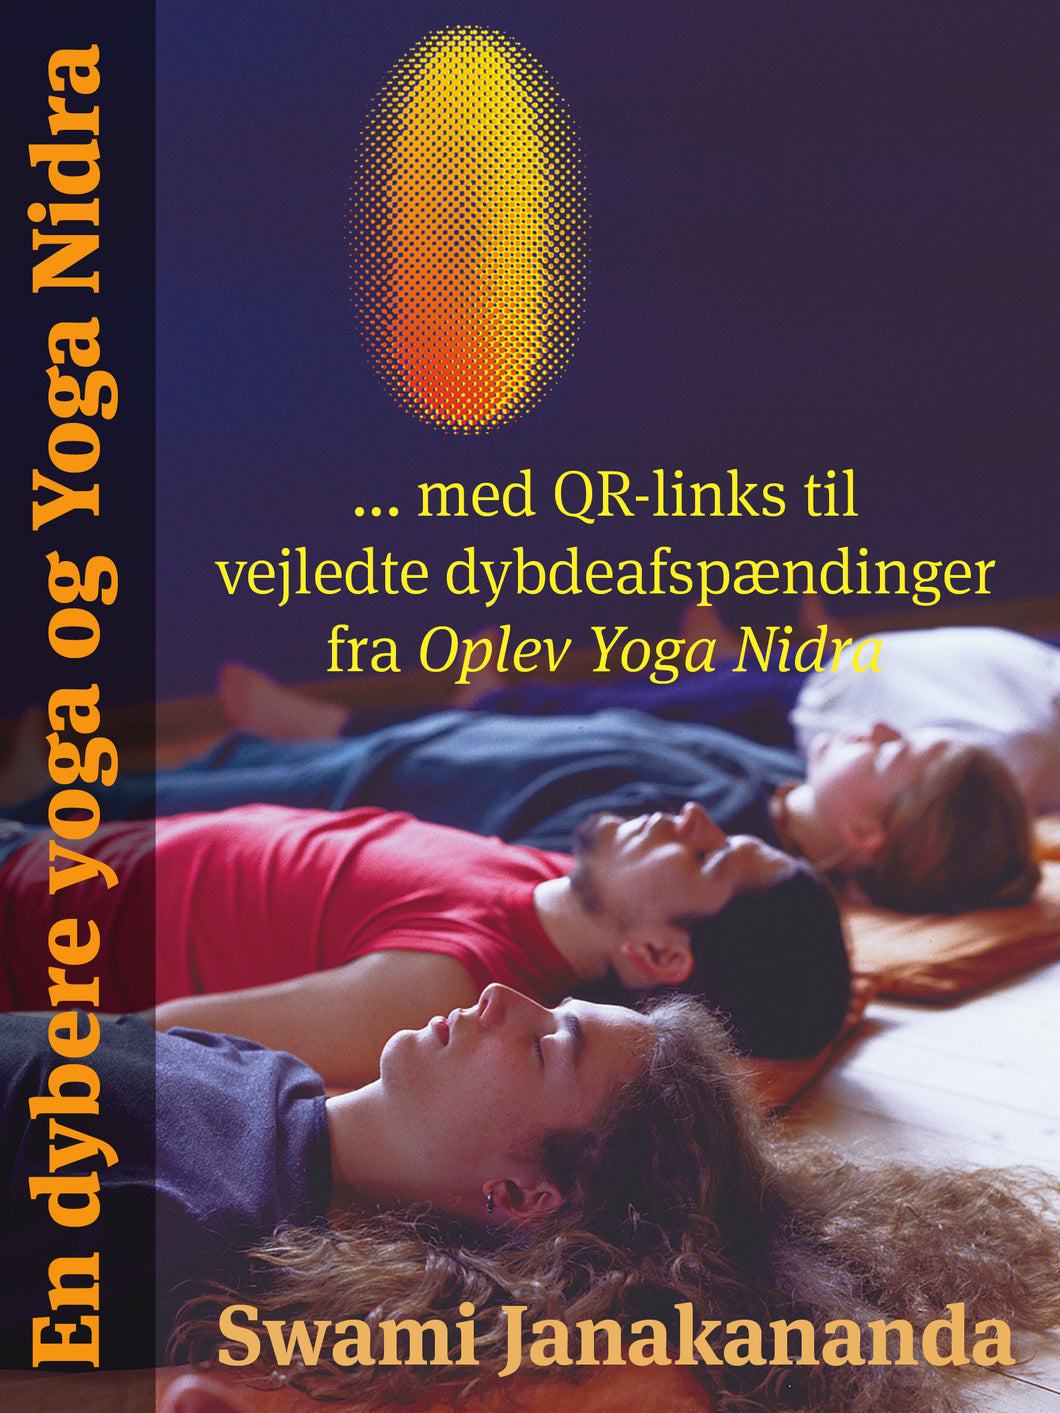 A deeper Yoga and Yoga Nidra